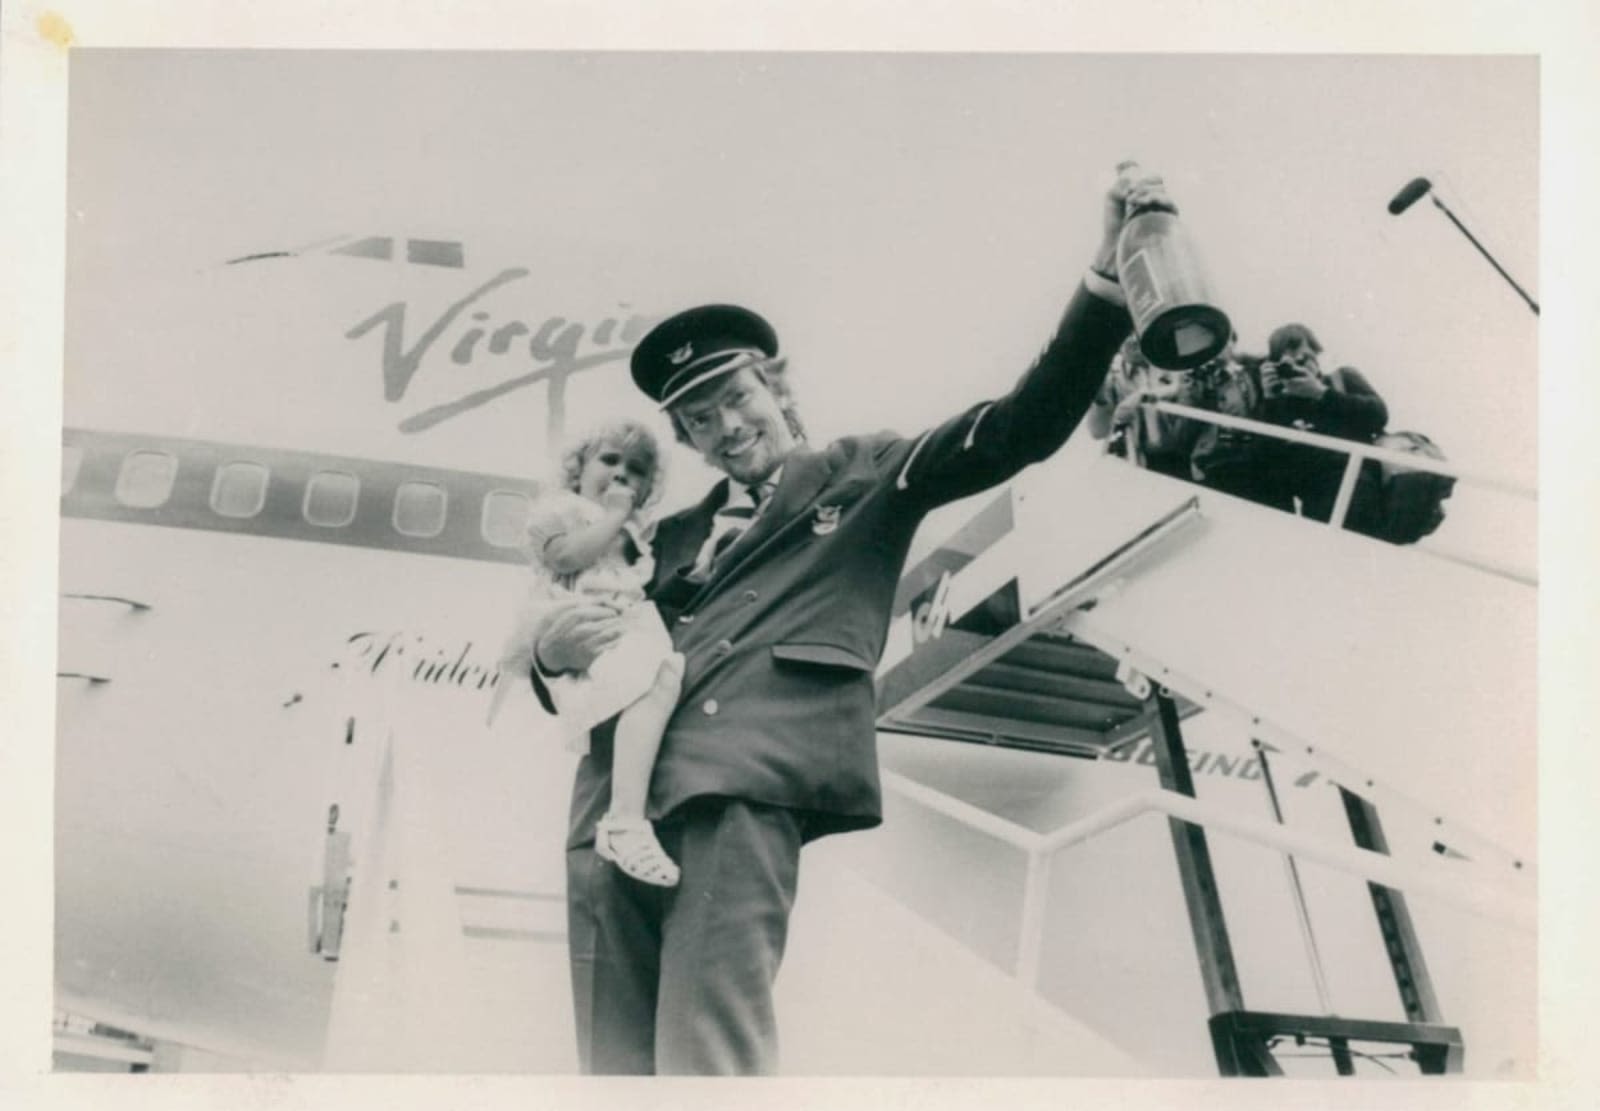 Richard Branson holding Holly as he celebrates Virgin Atlantic's inaugural flight 